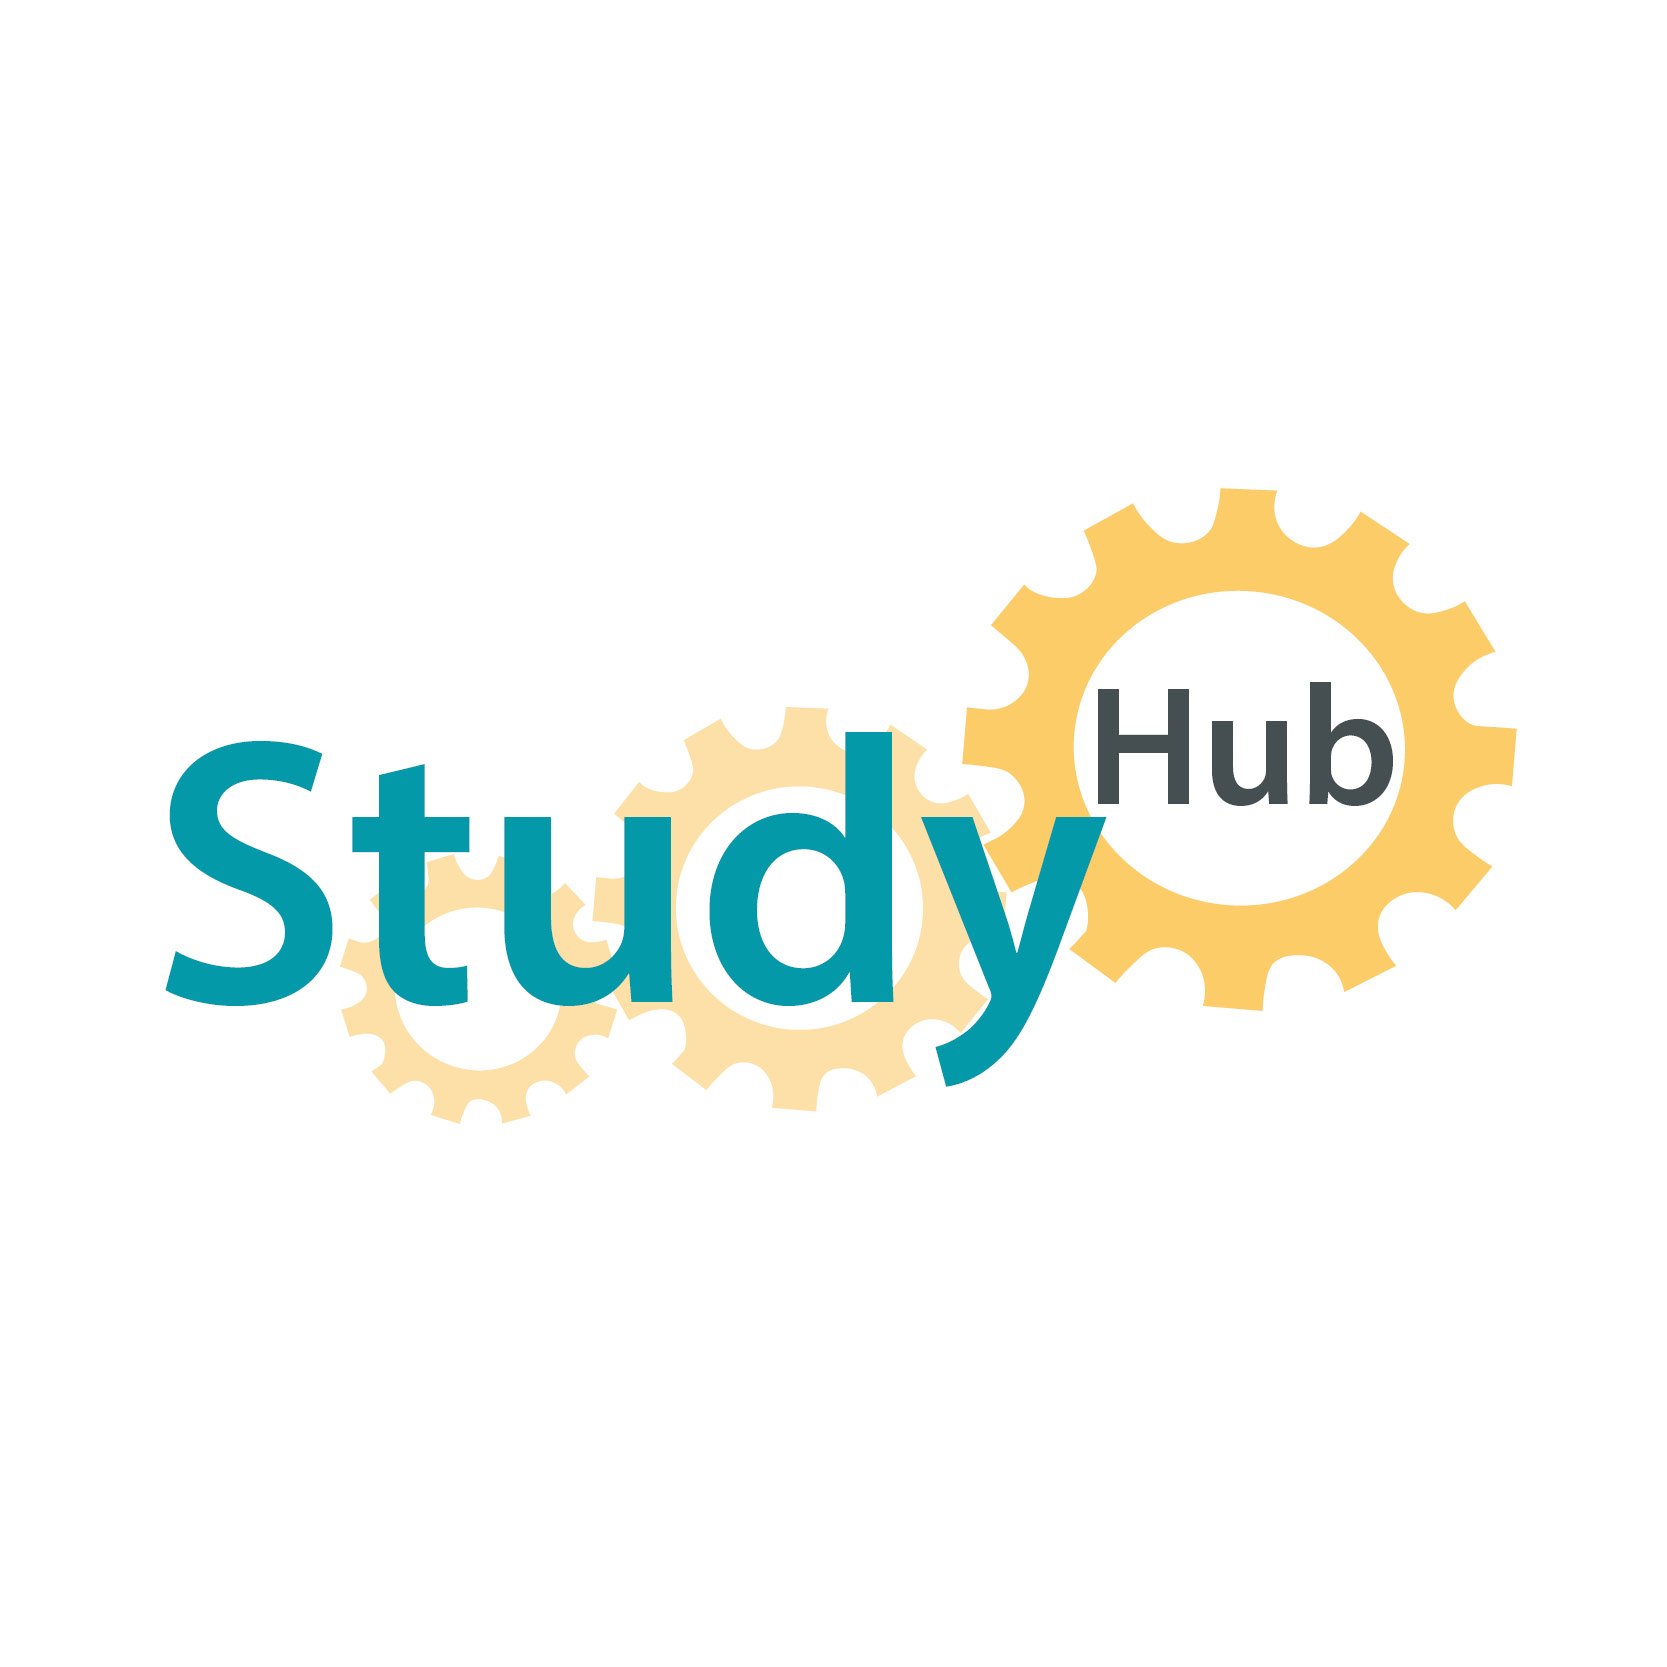 StudyHub